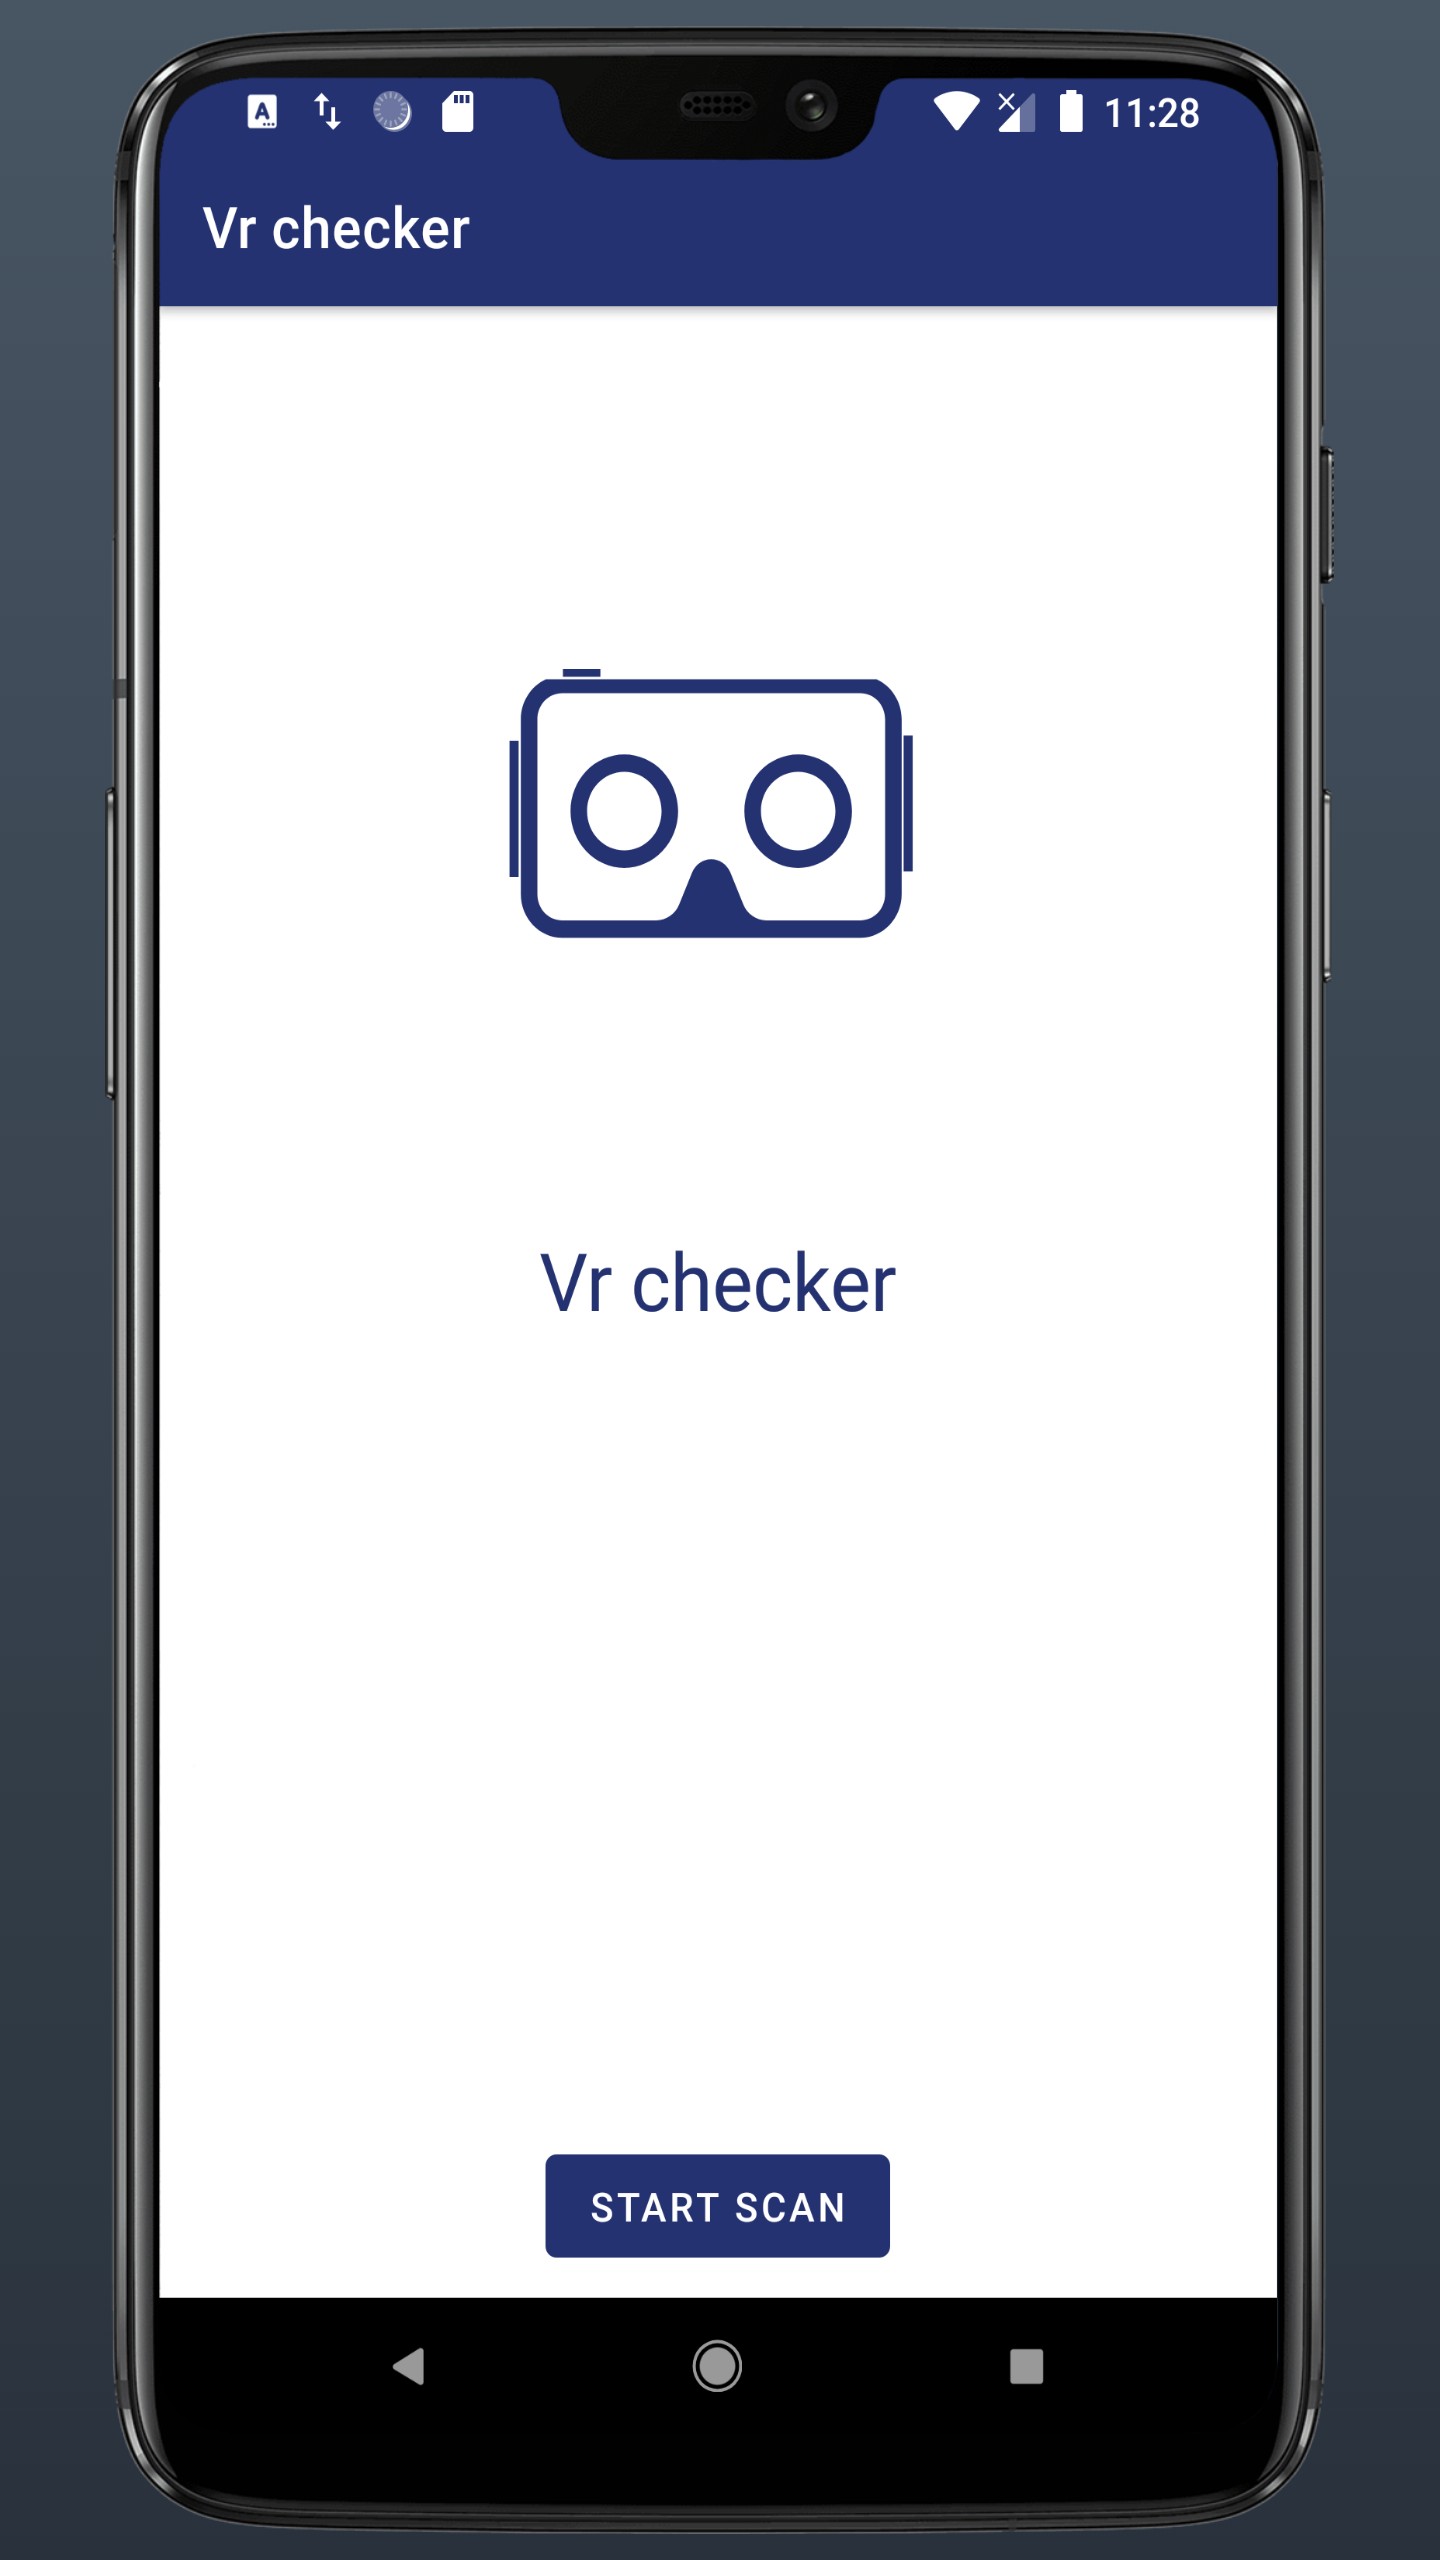 VR checker